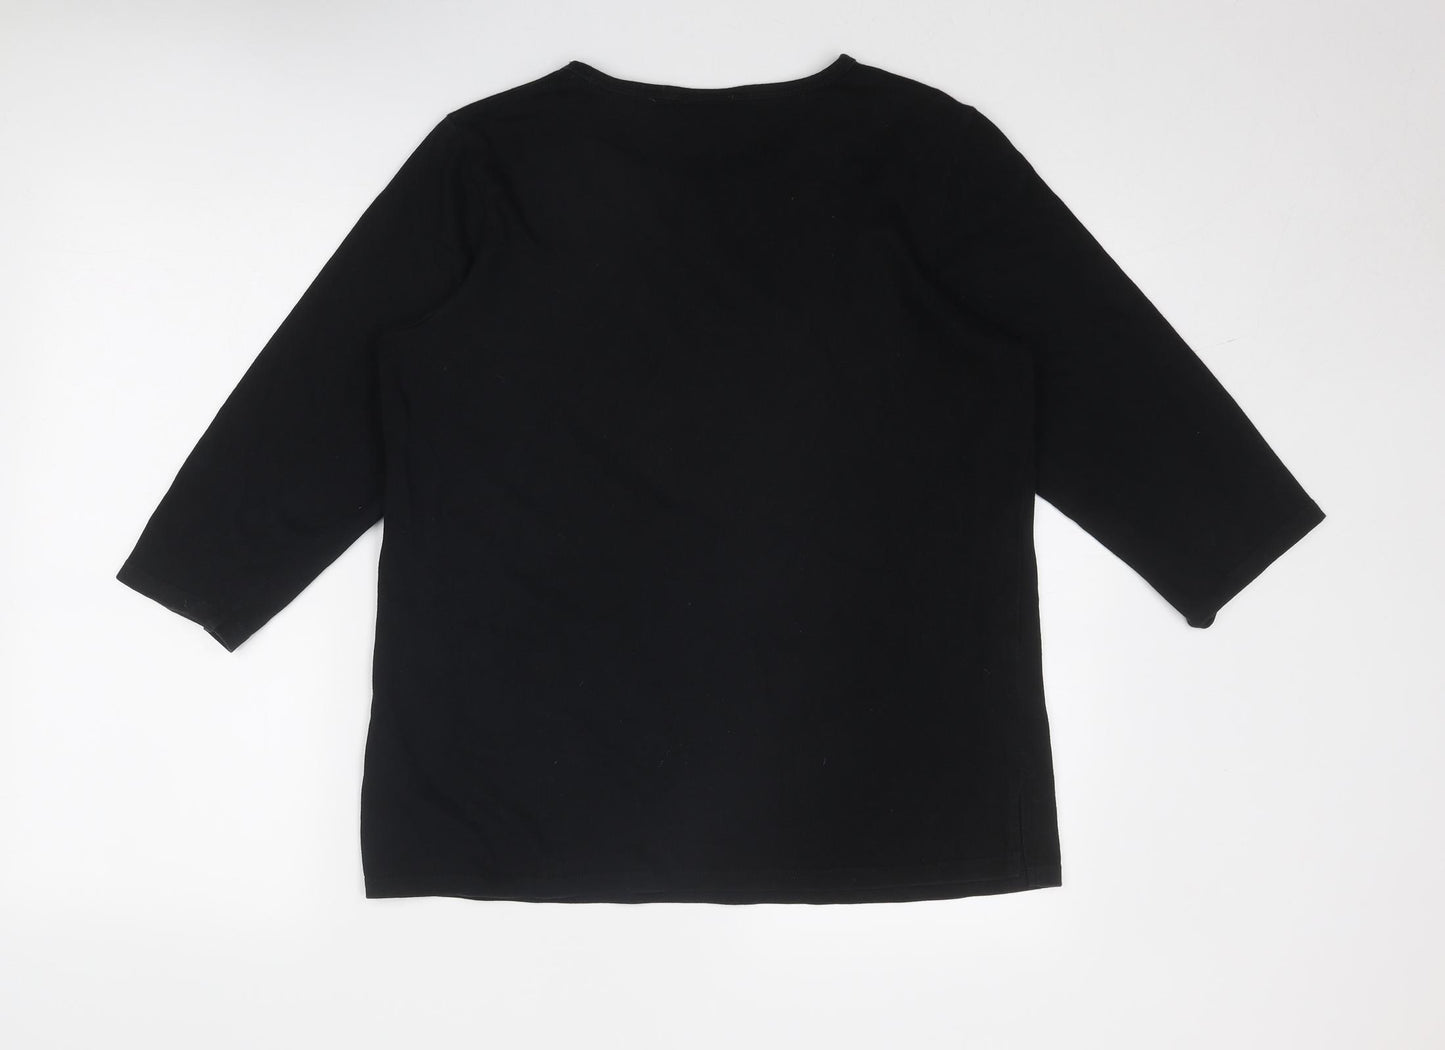 Quacker Factory Womens Black Cotton Basic T-Shirt Size M Round Neck - Reindeer Christmas